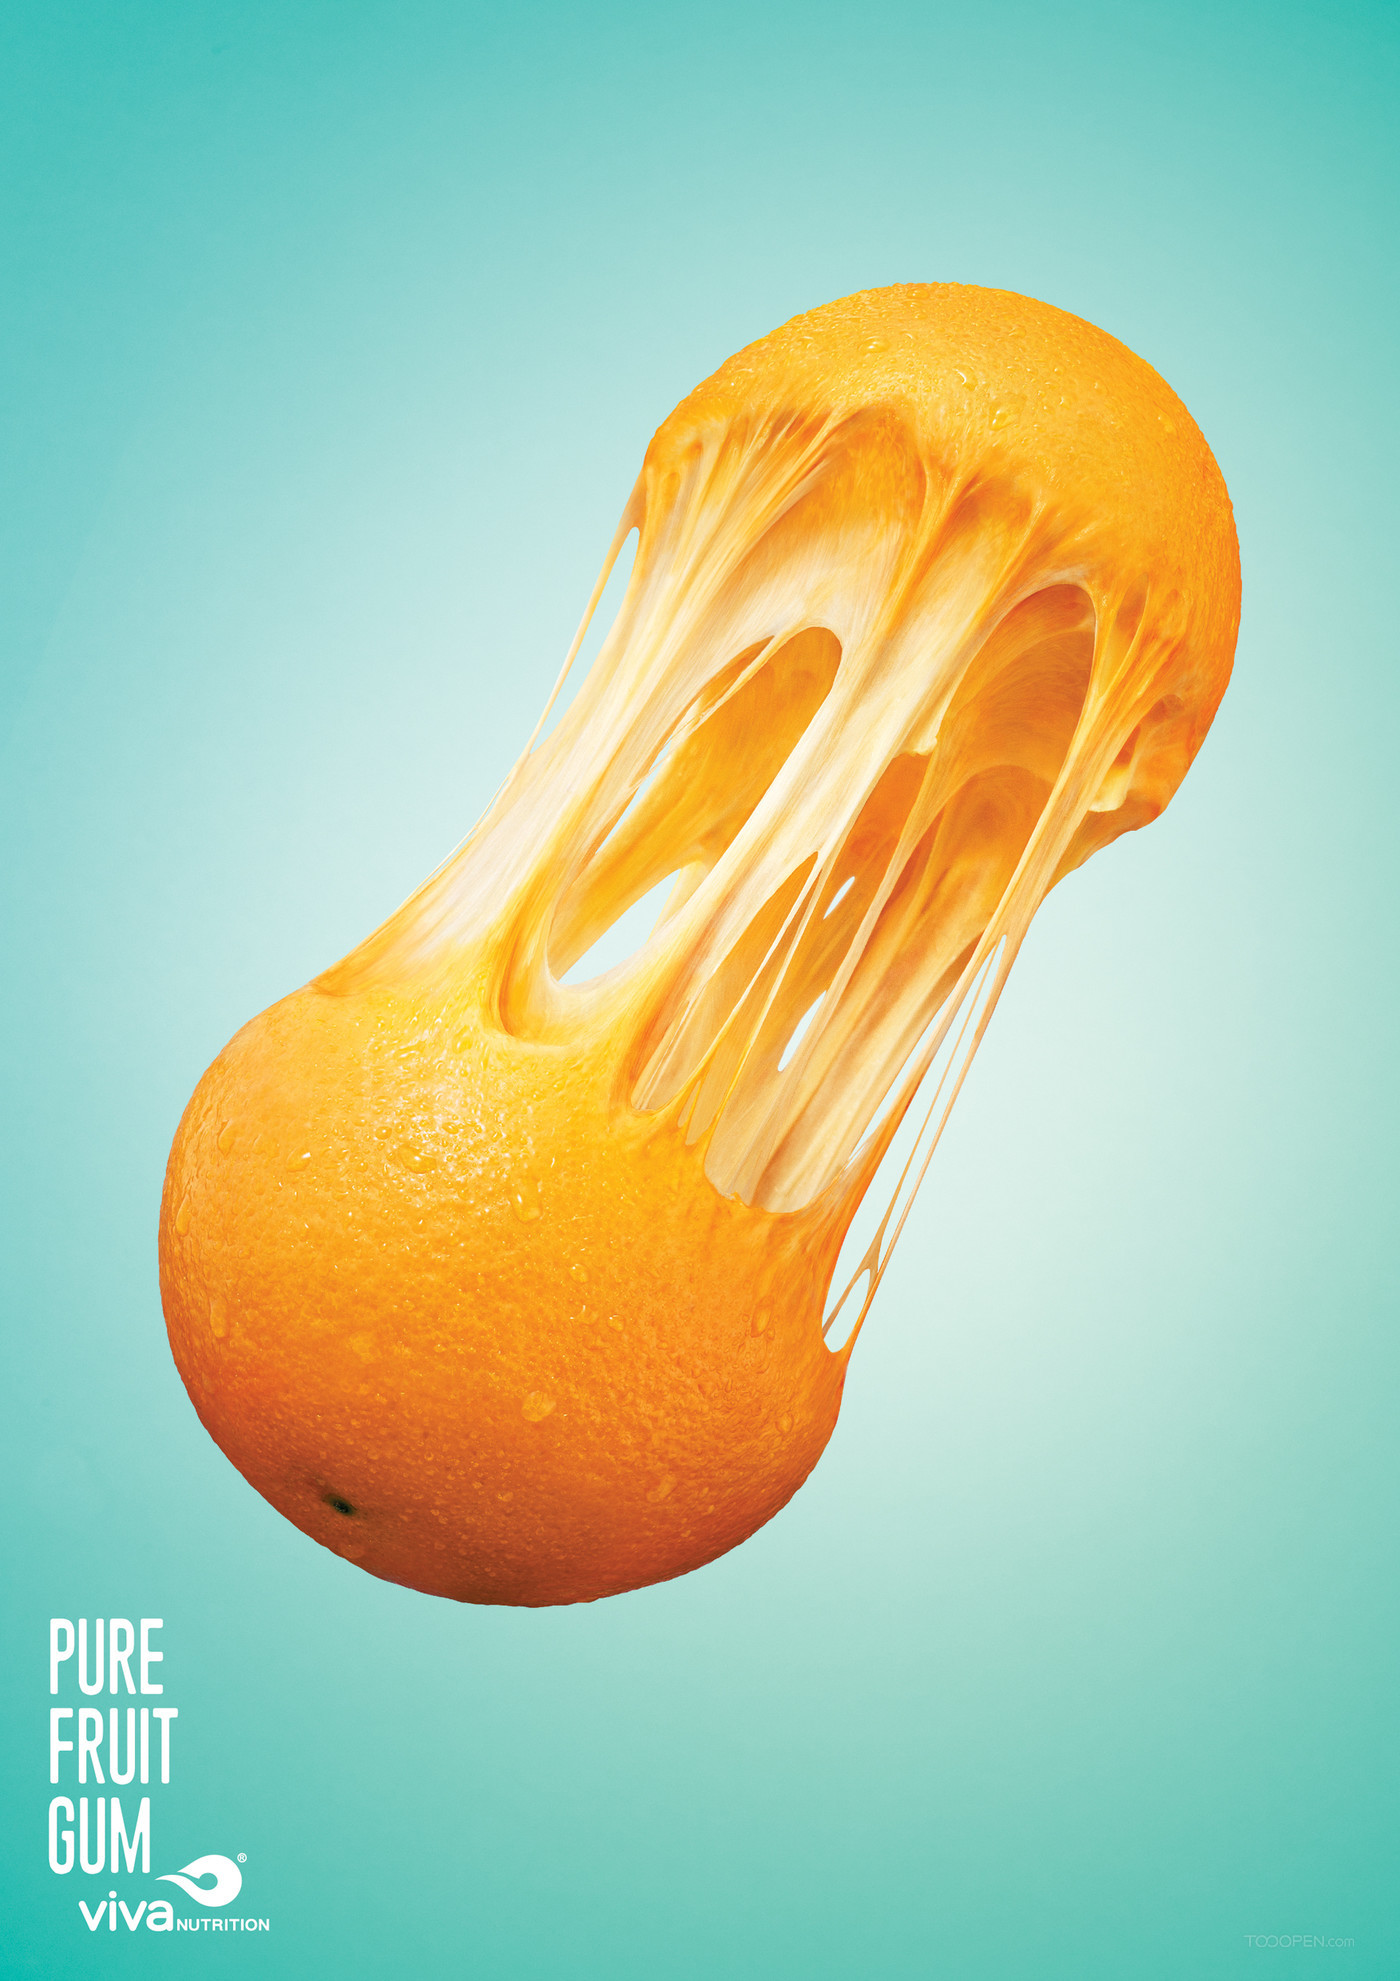 Viva Nutrition纯果胶创意广告海报设计欣赏-03